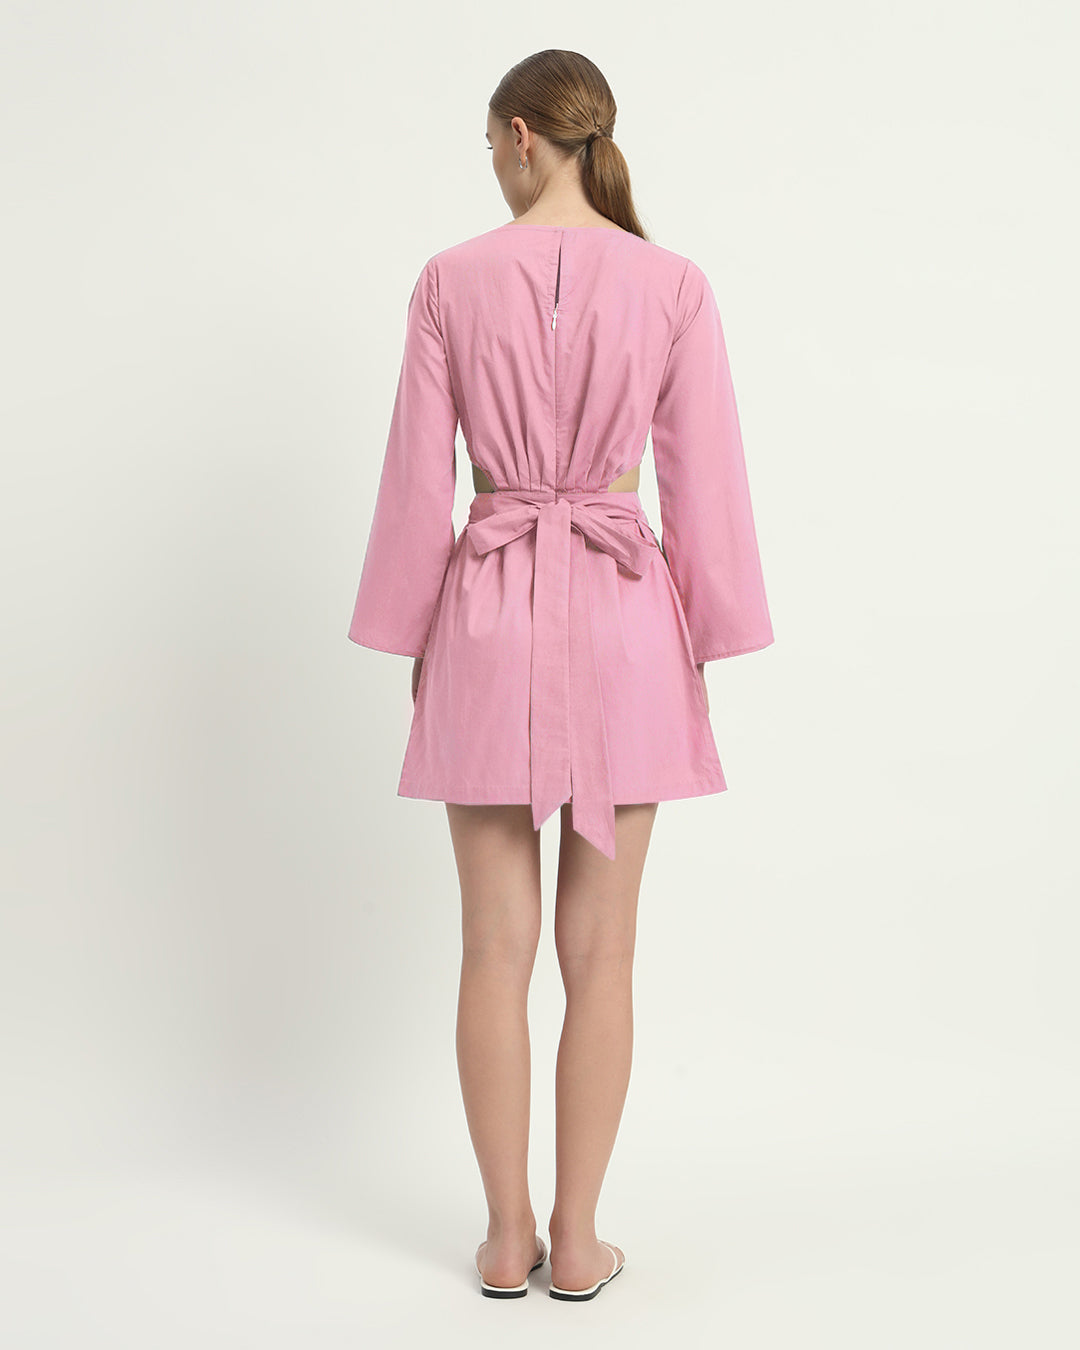 The Fondant Pink Eloy Cotton Dress